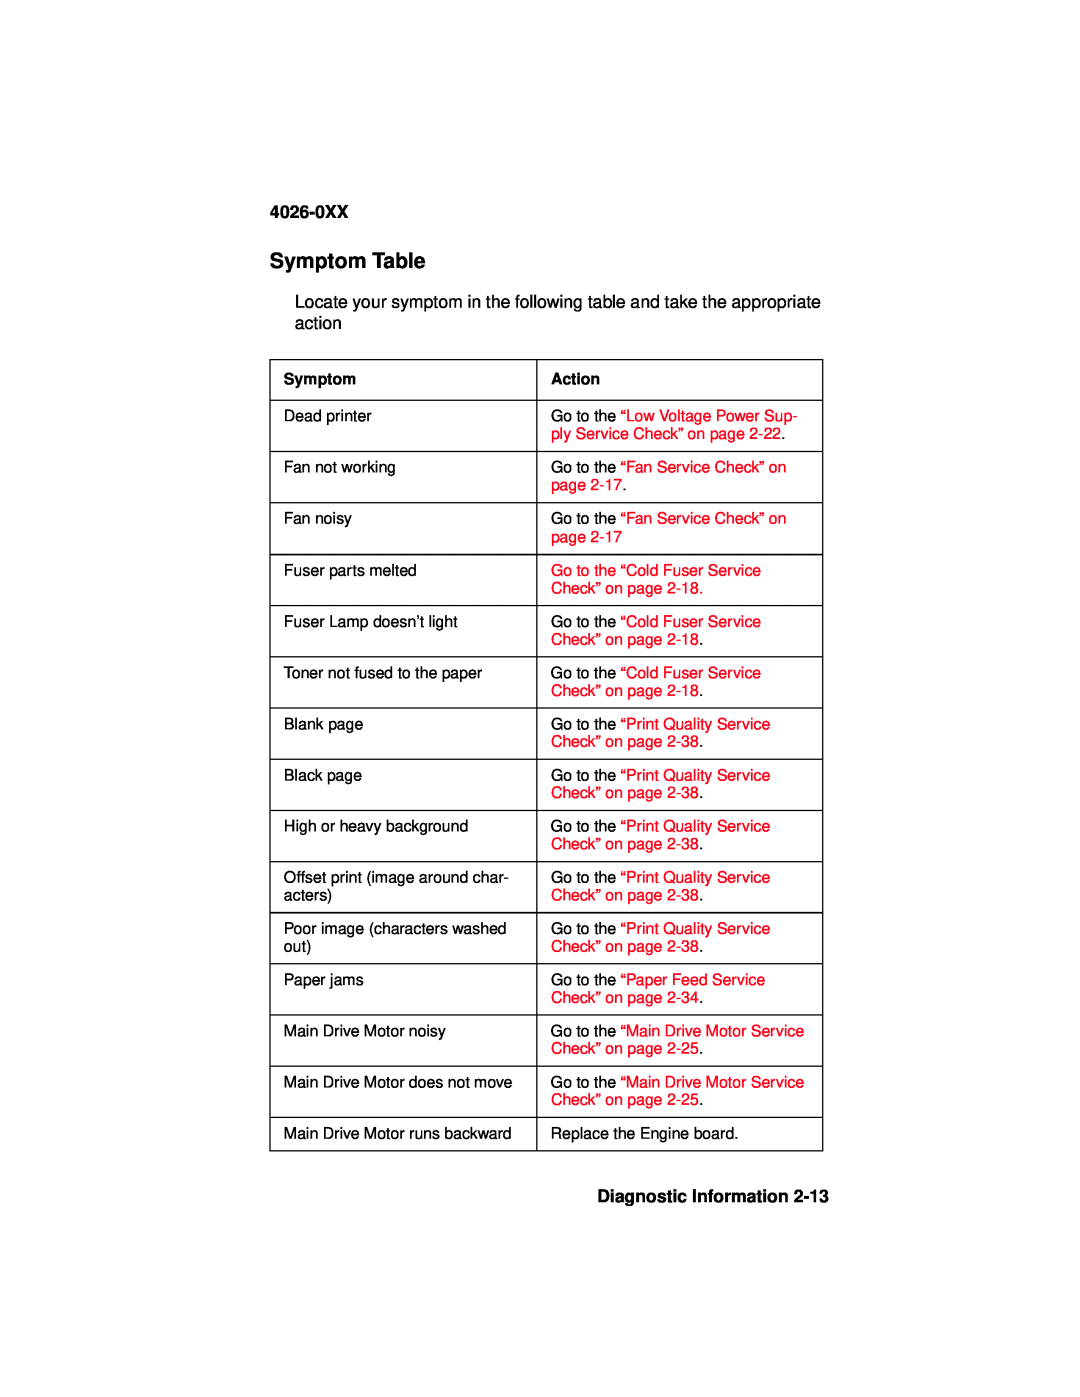 Lexmark 4026-0XX manual Symptom Table, Diagnostic Information, Action 